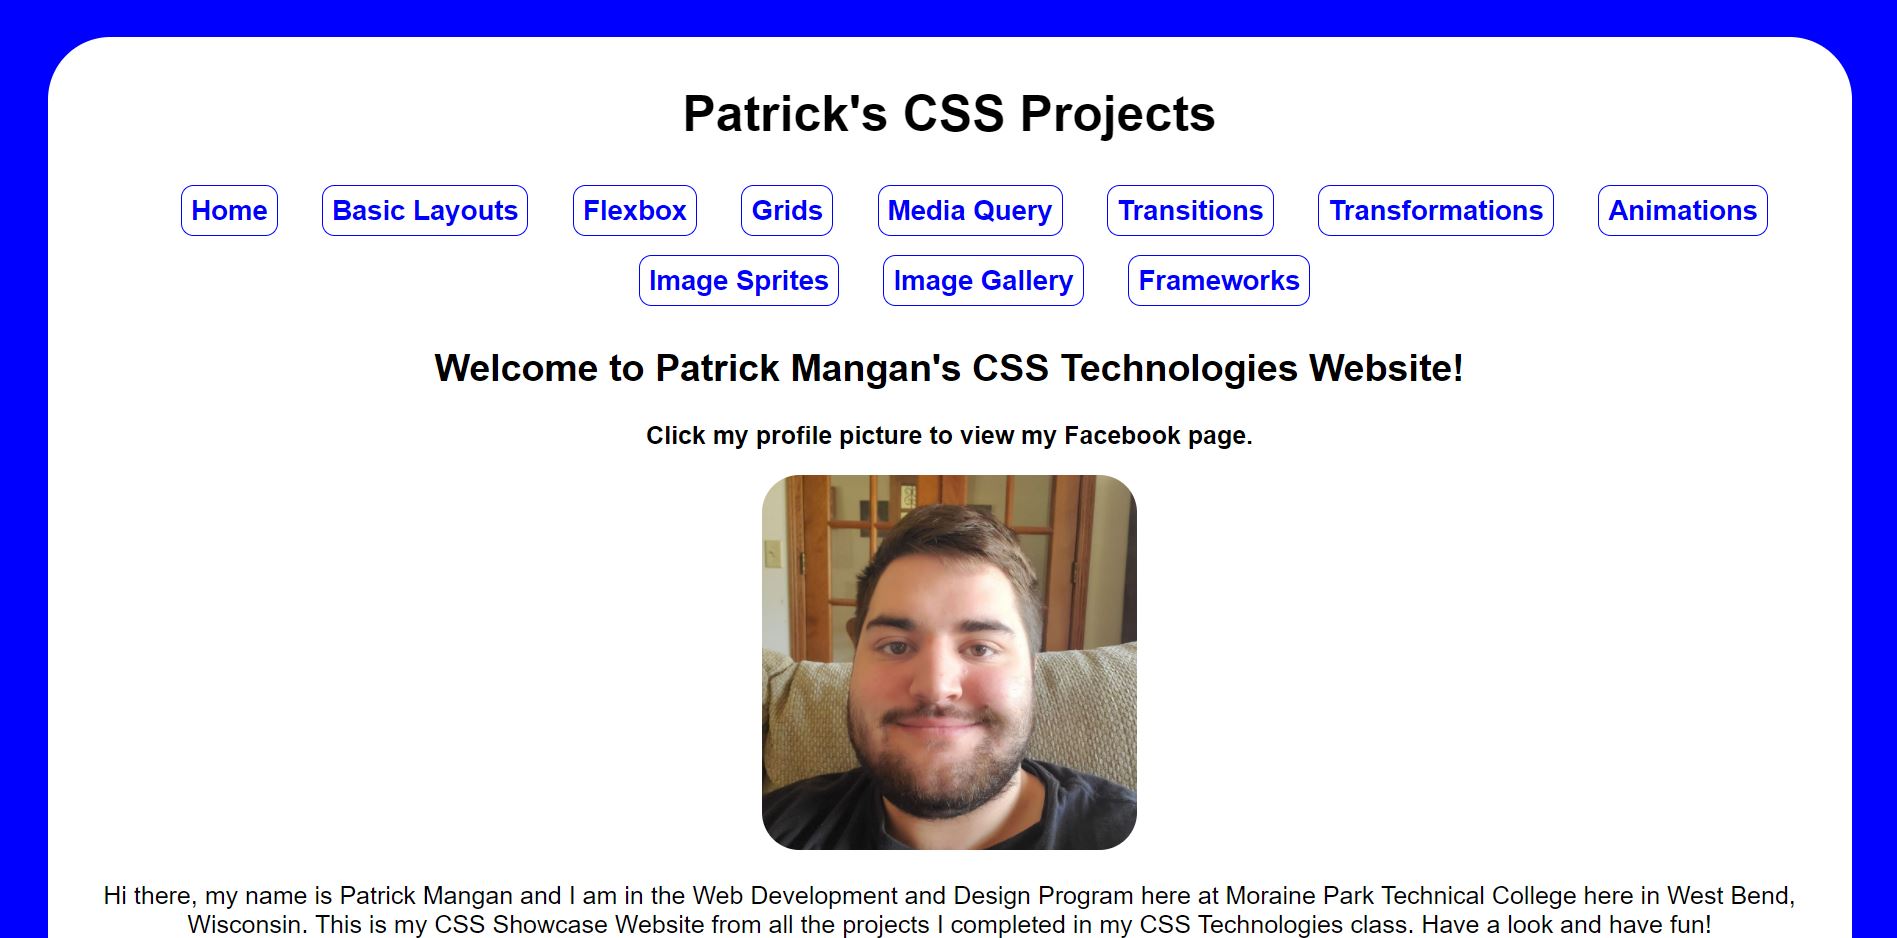 Patrick Mangan's CSS Technologies